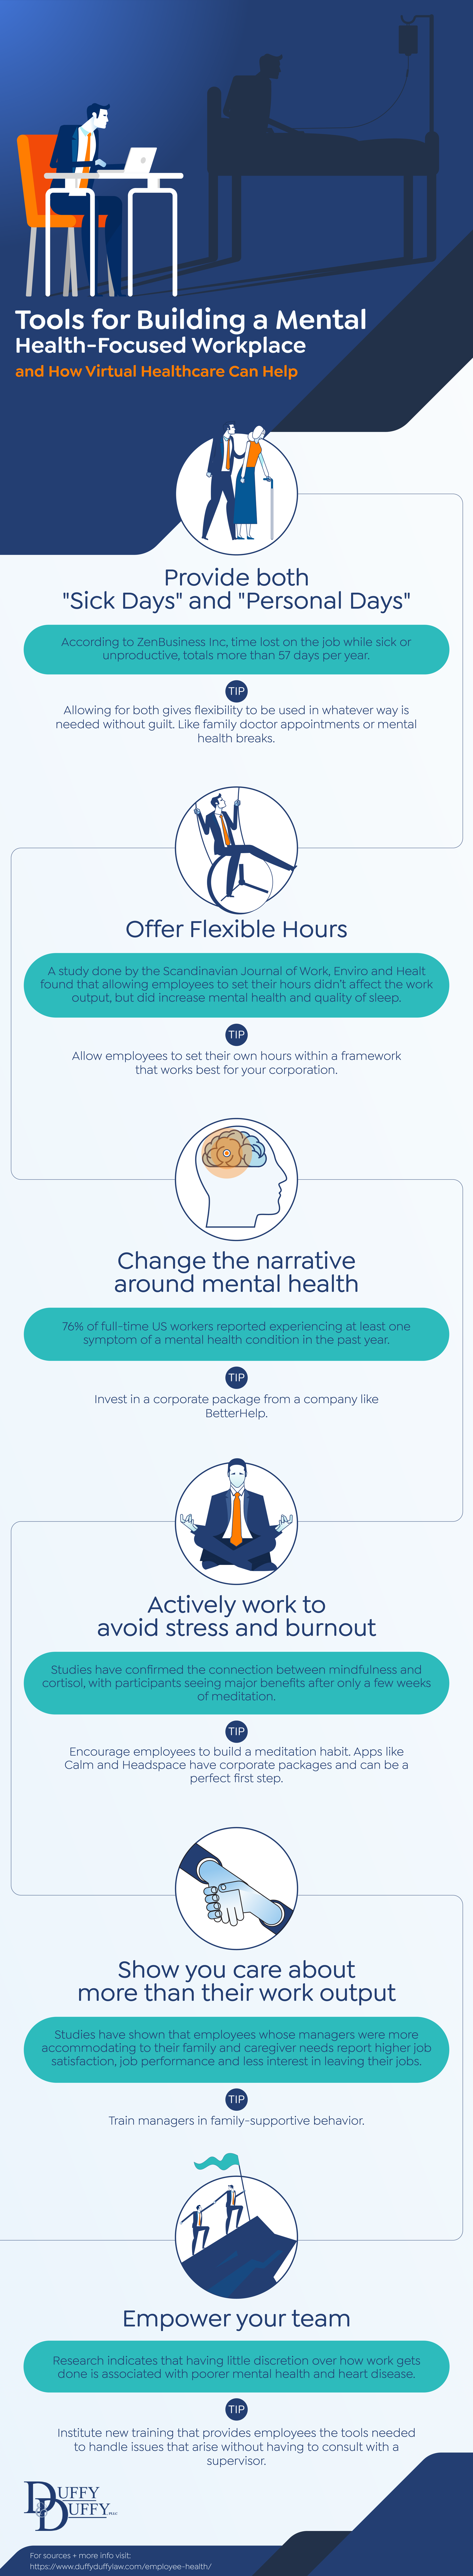 Employee Mental Health Infographic Image